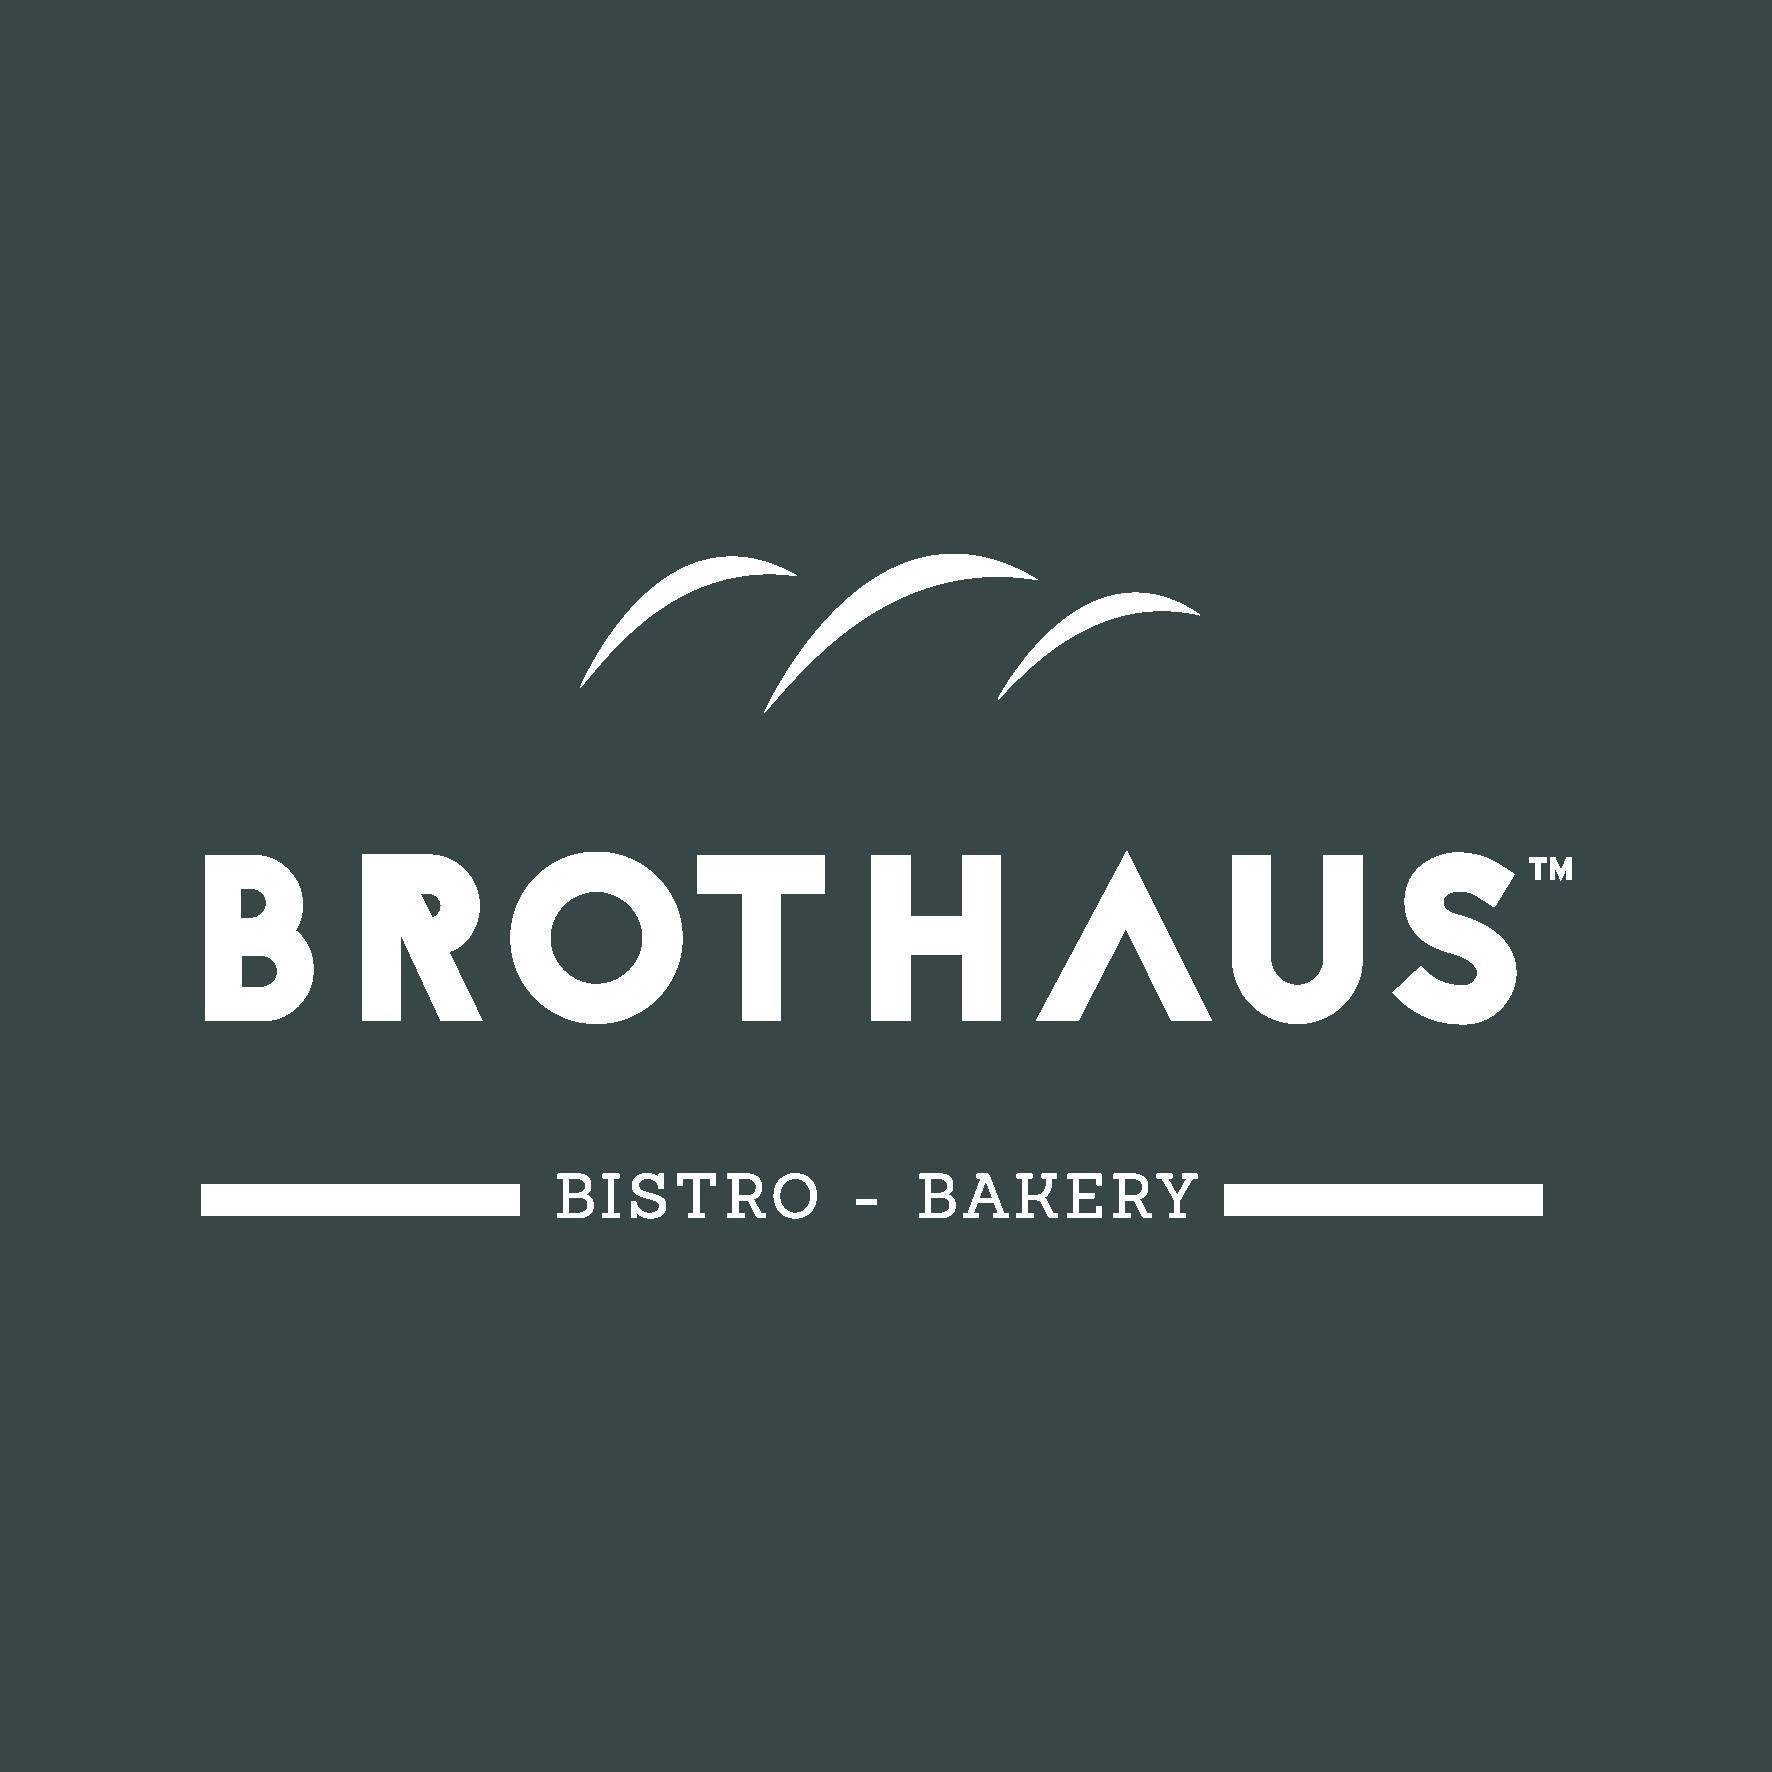 Brothaus Bakery - Bistro